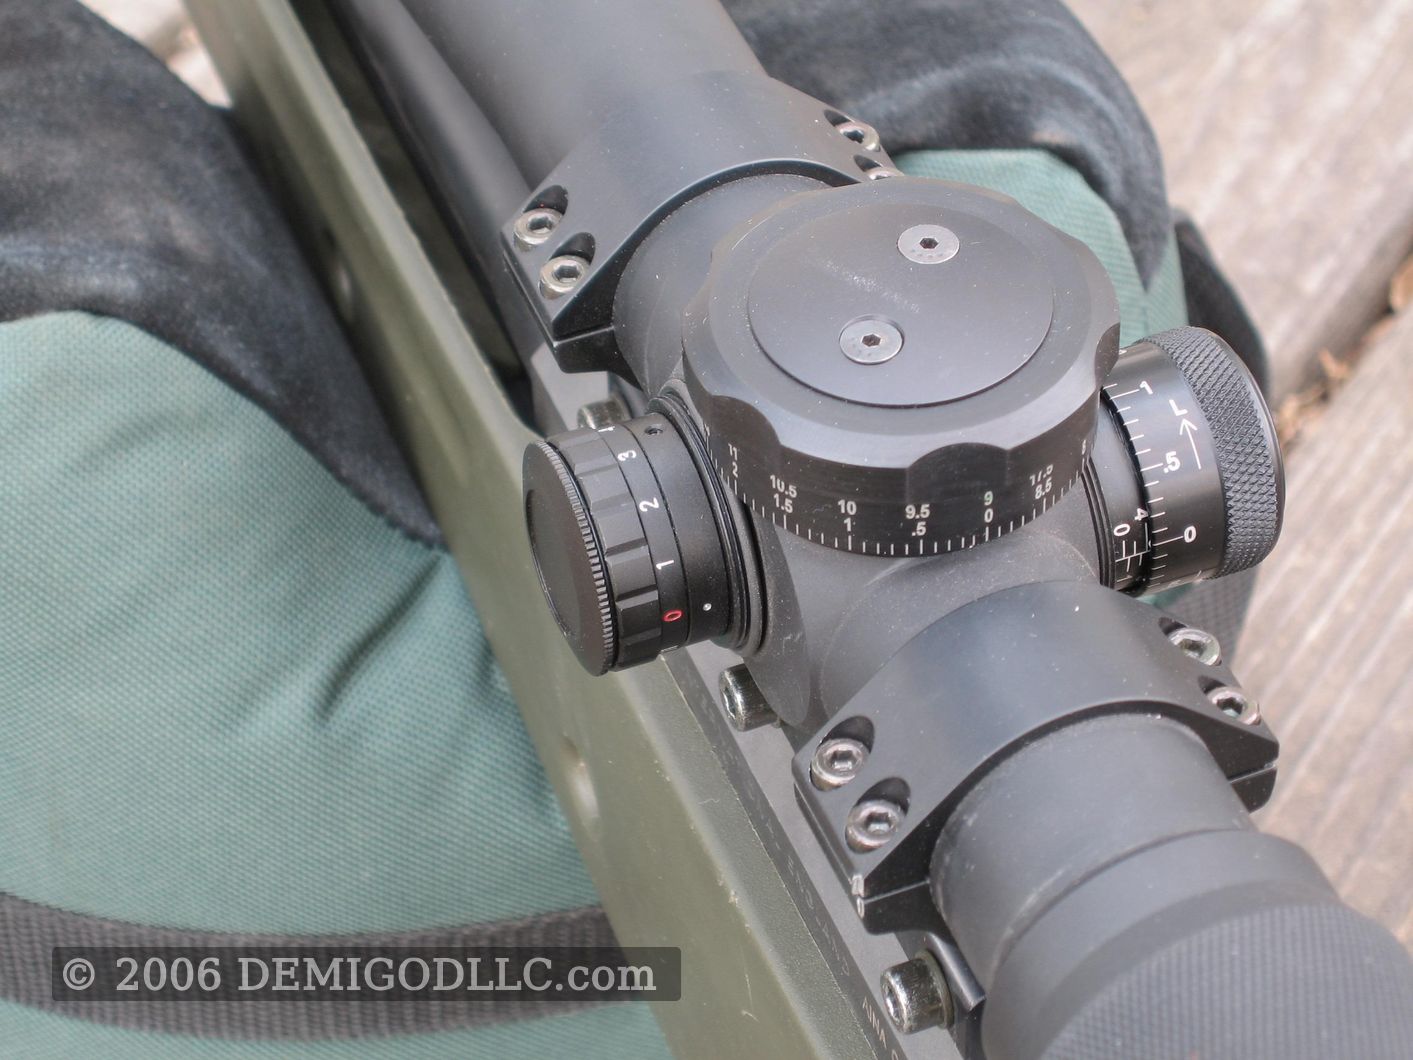 S&B 5-25x56mm PMII vs. USO 3.8-22x44mm SN3 (comparison review)
, photo 